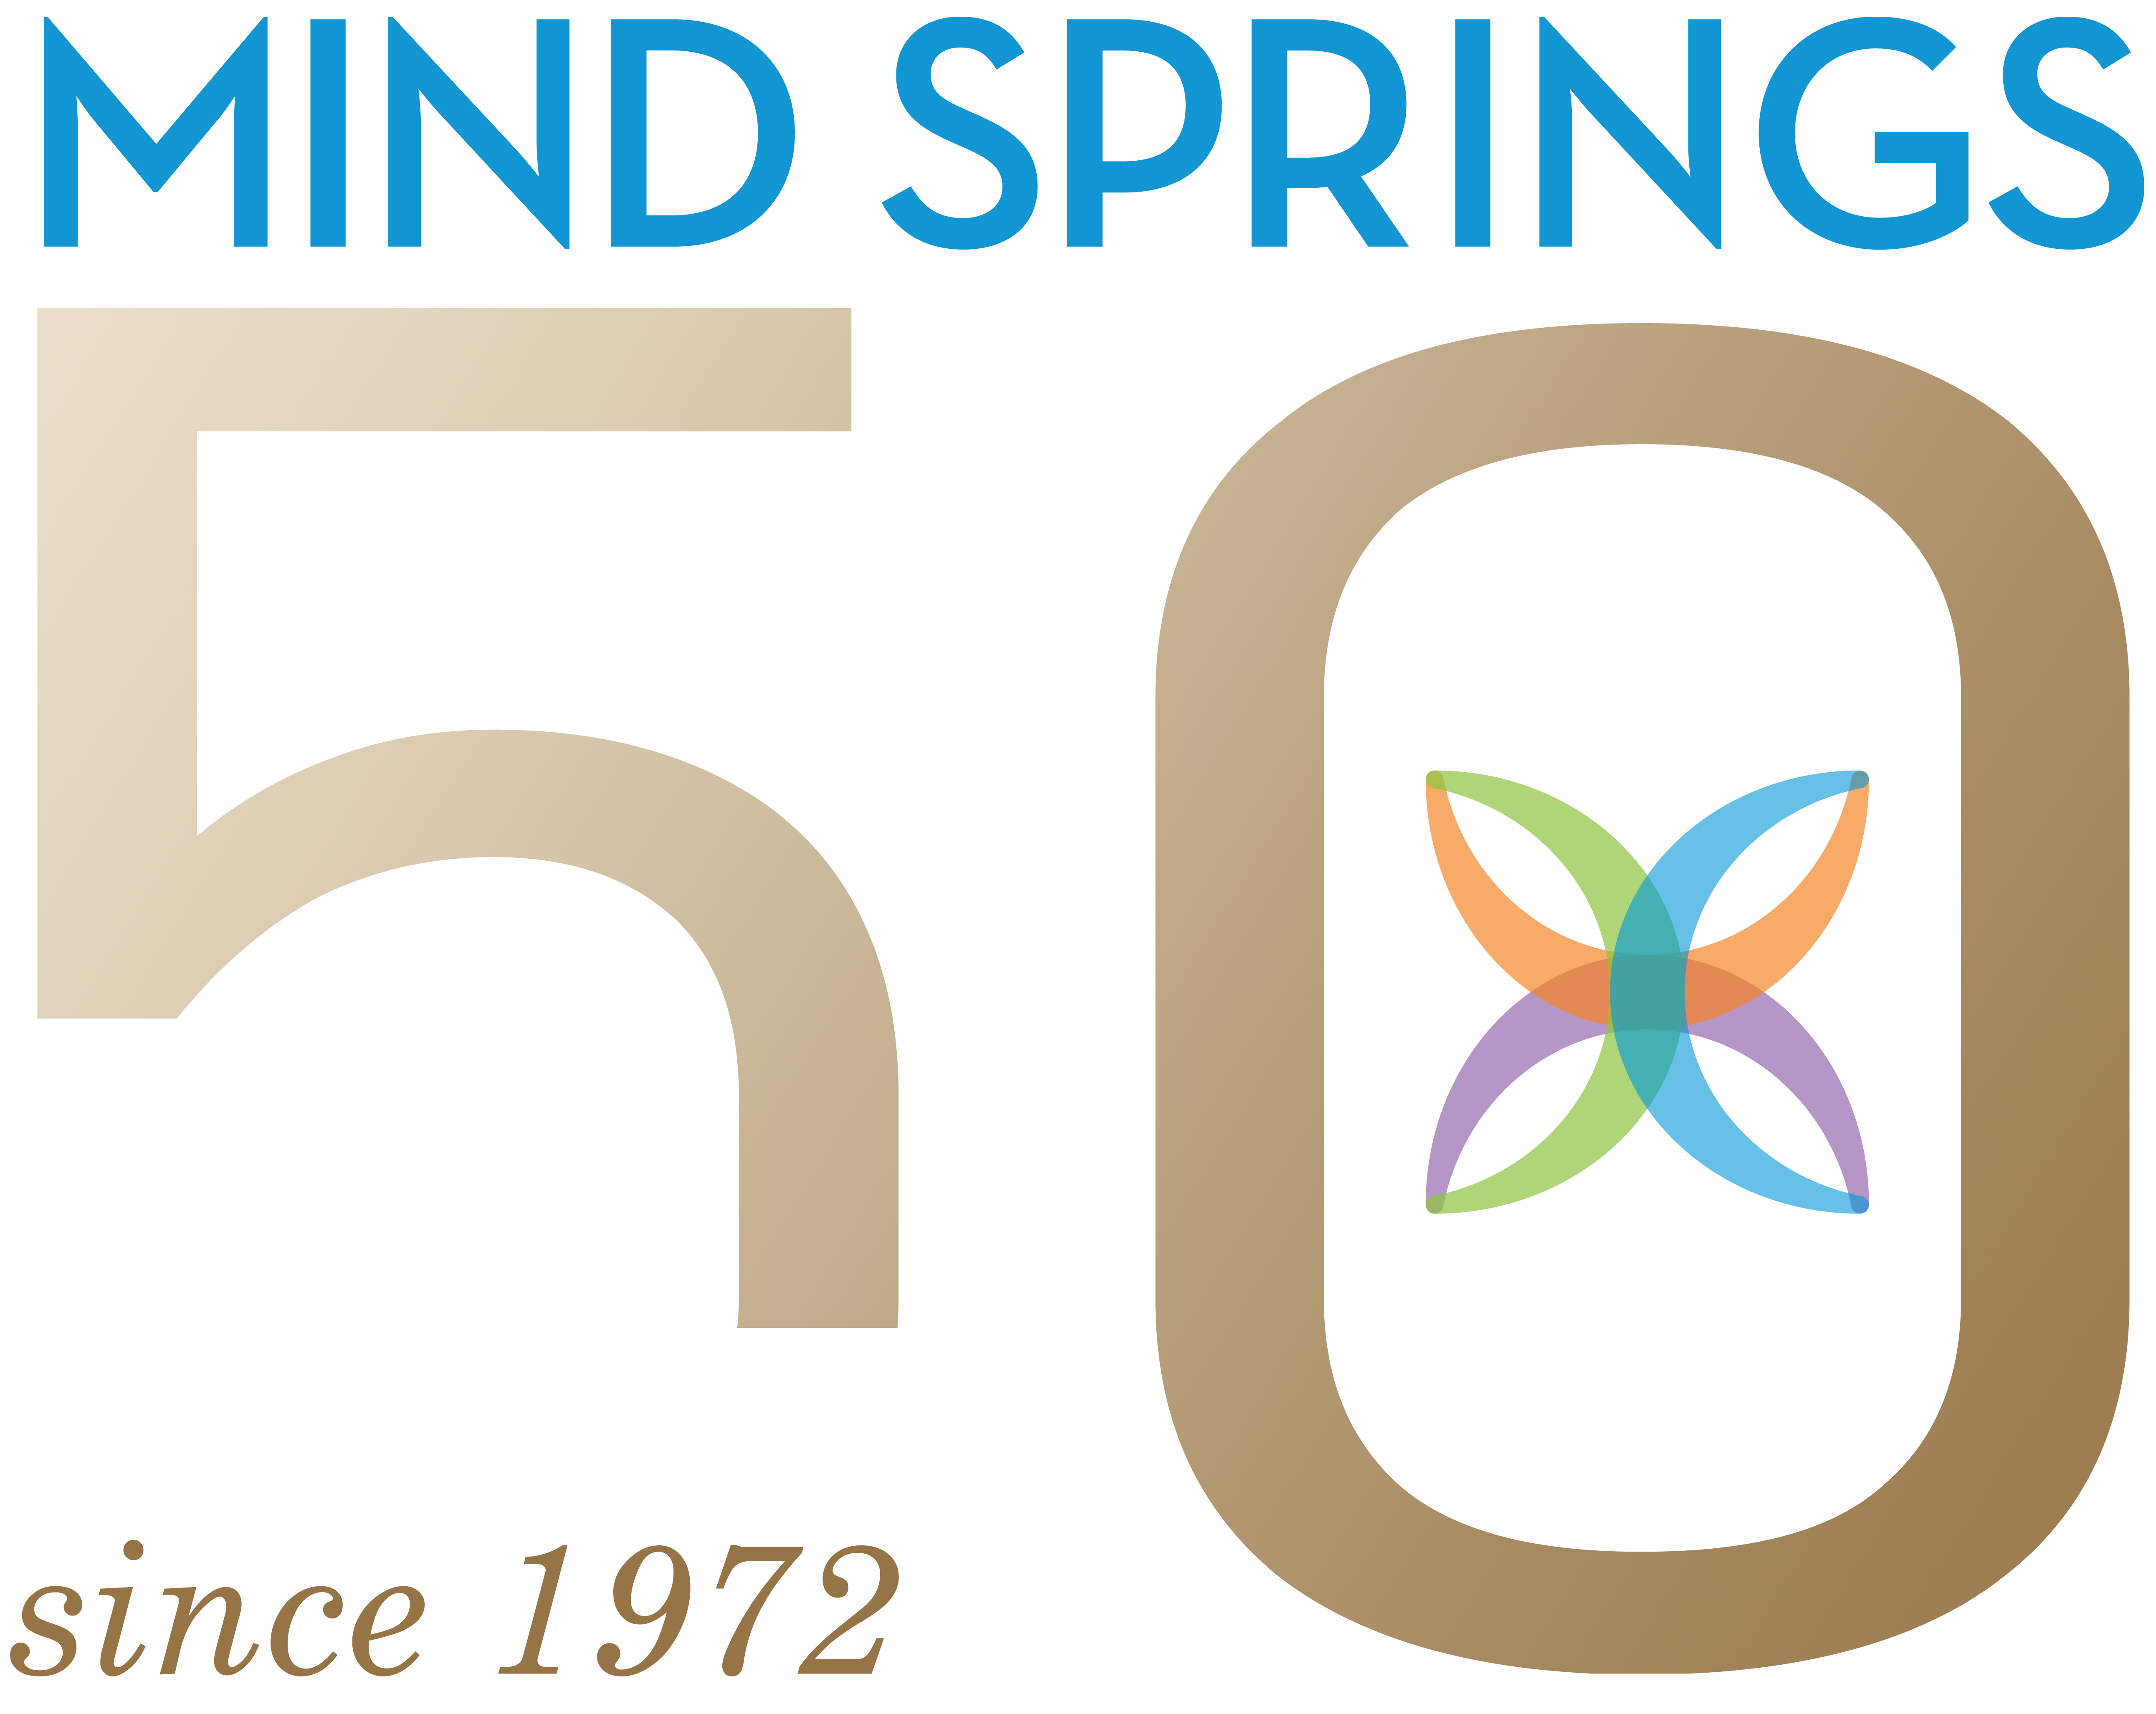 Mind Springs Health 50th Anniversary logo